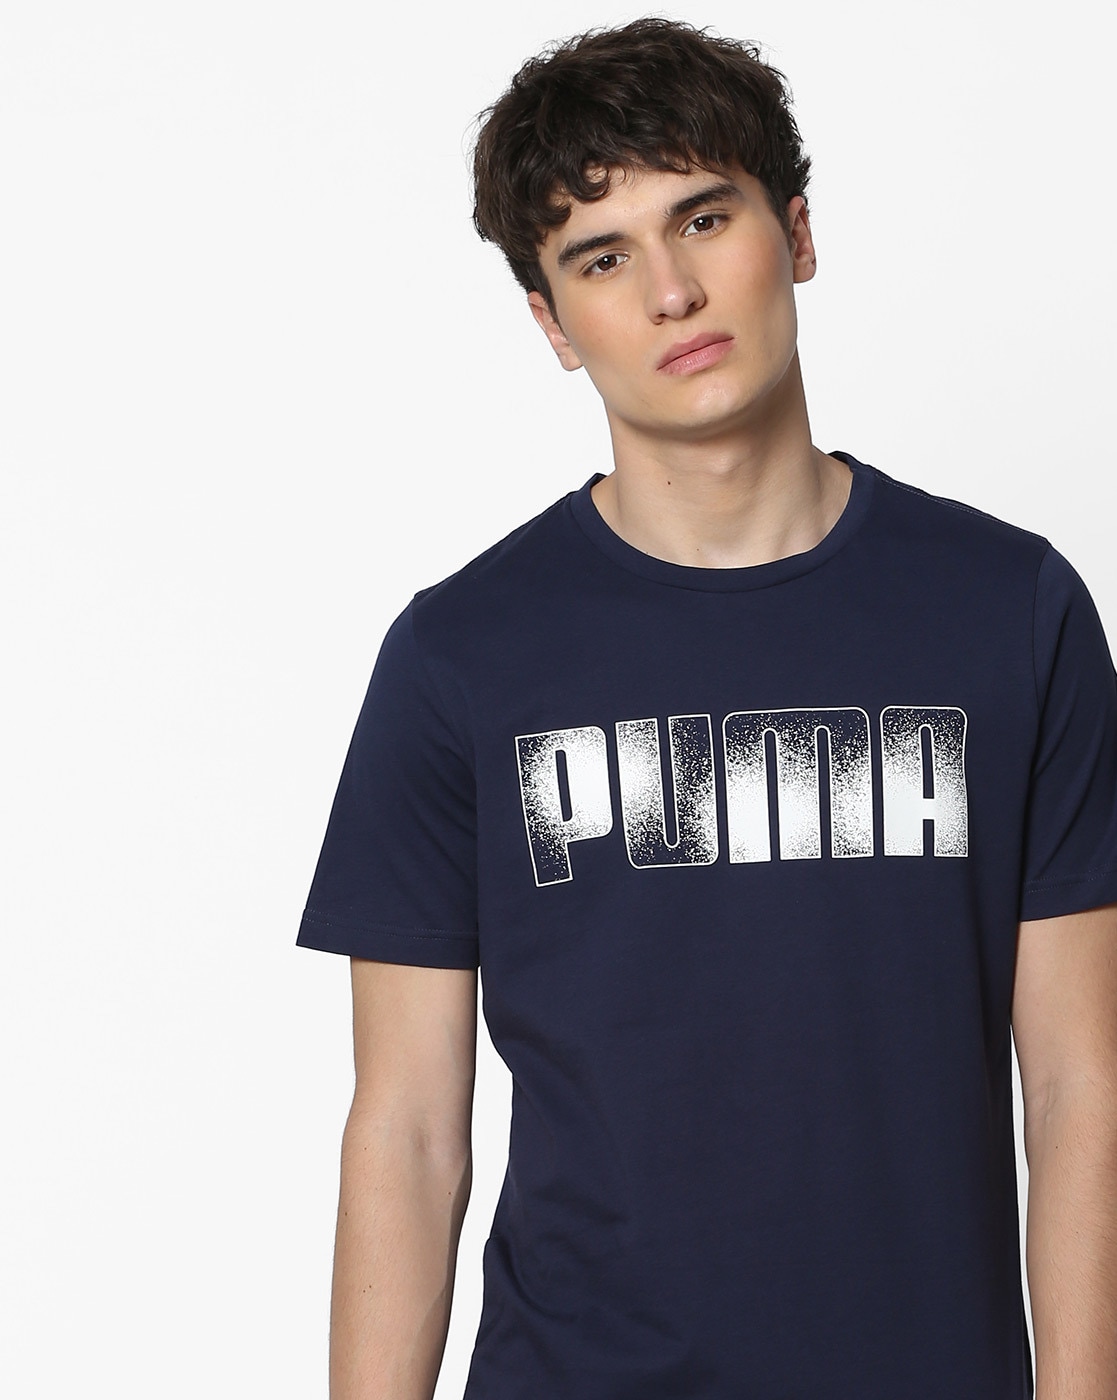 buy puma t shirts online india